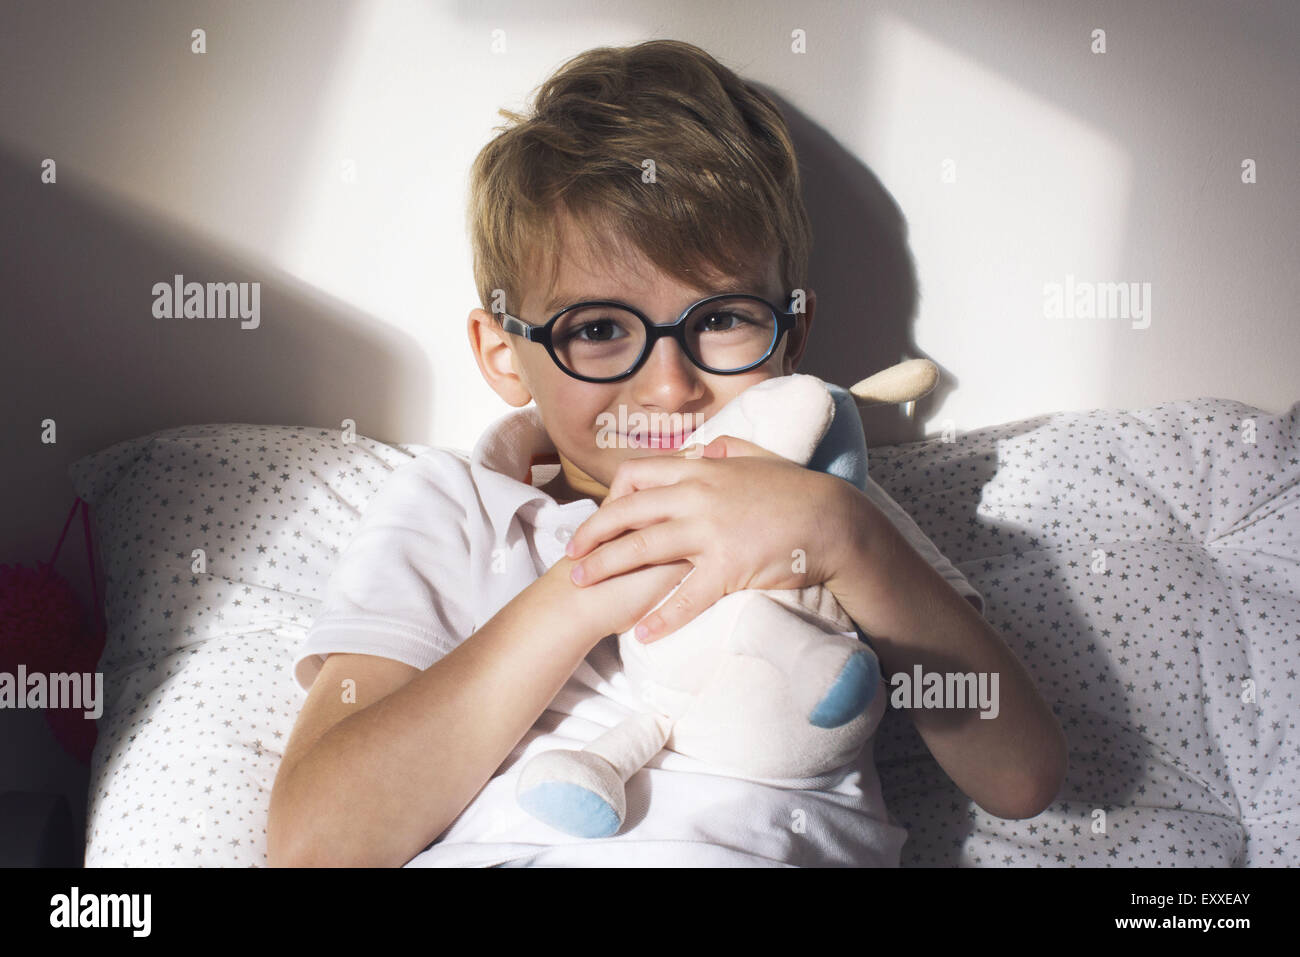 Little boy hugging stuffed toy Stock Photo